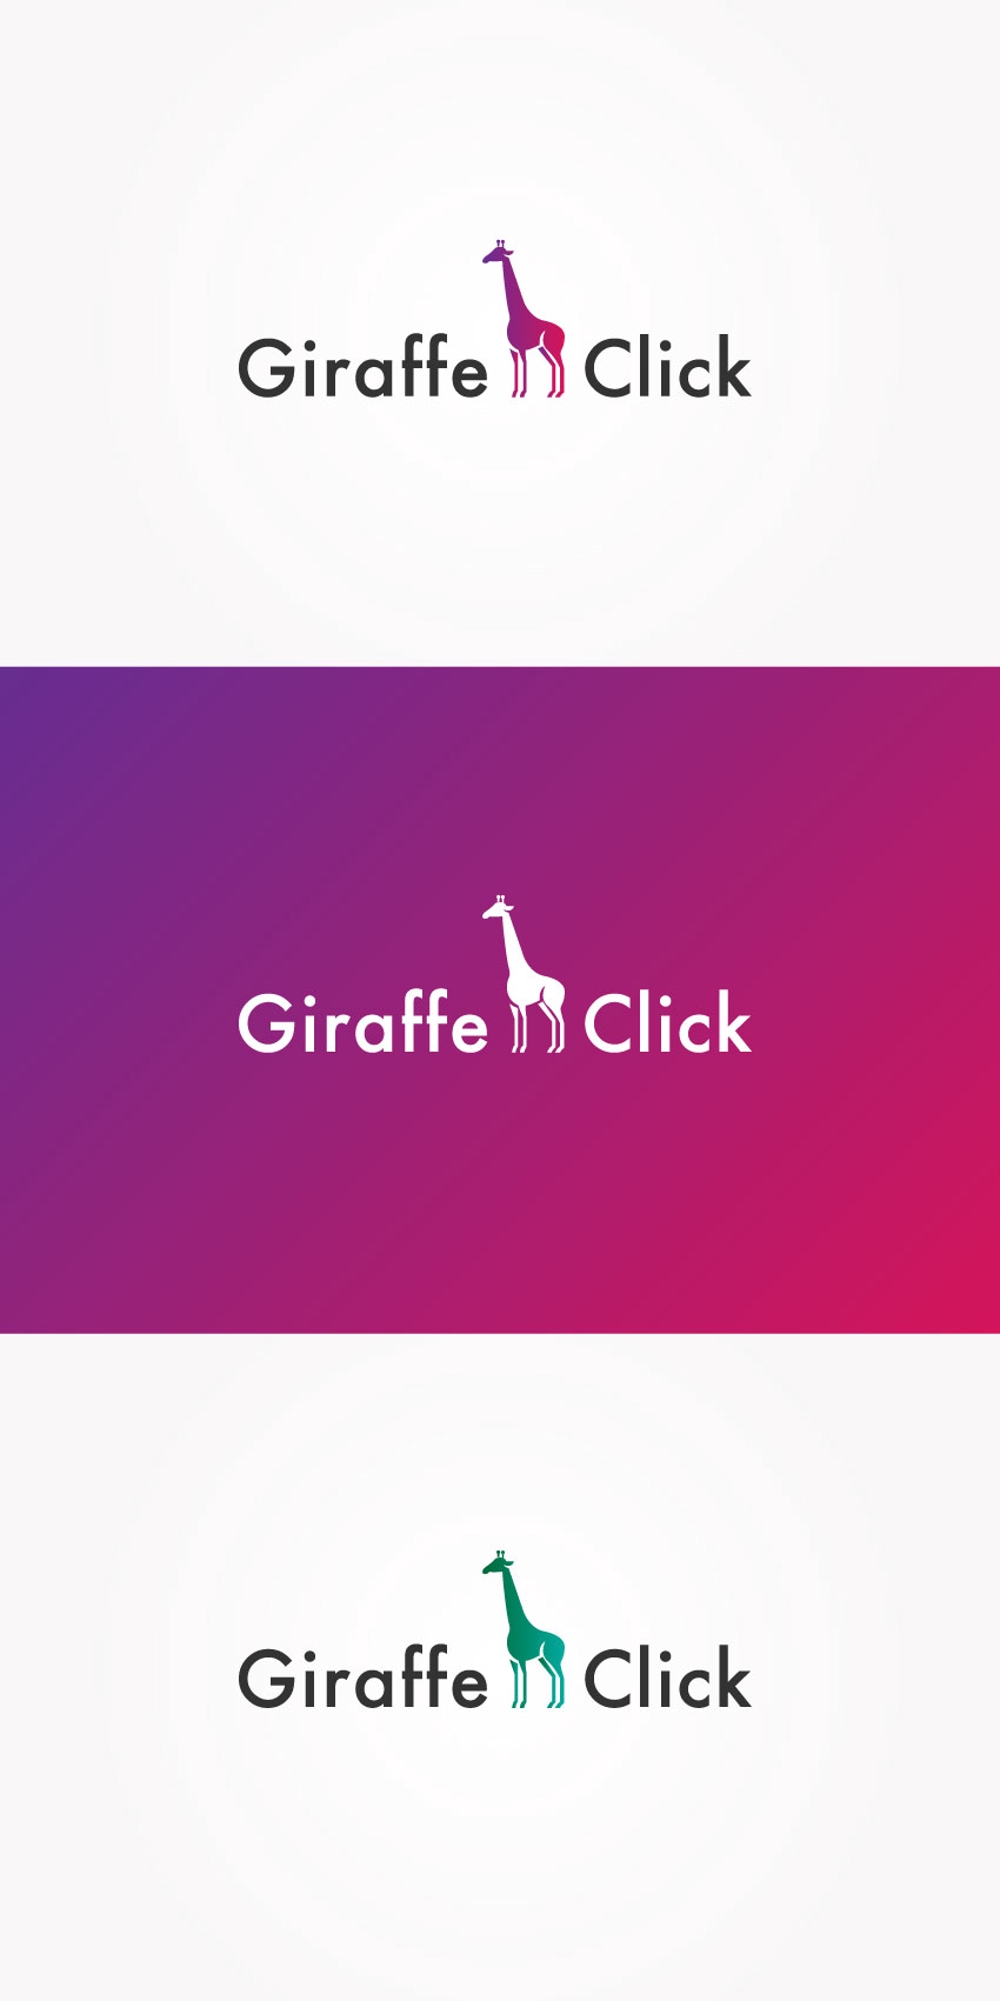 Giraffe-Click-02.jpg